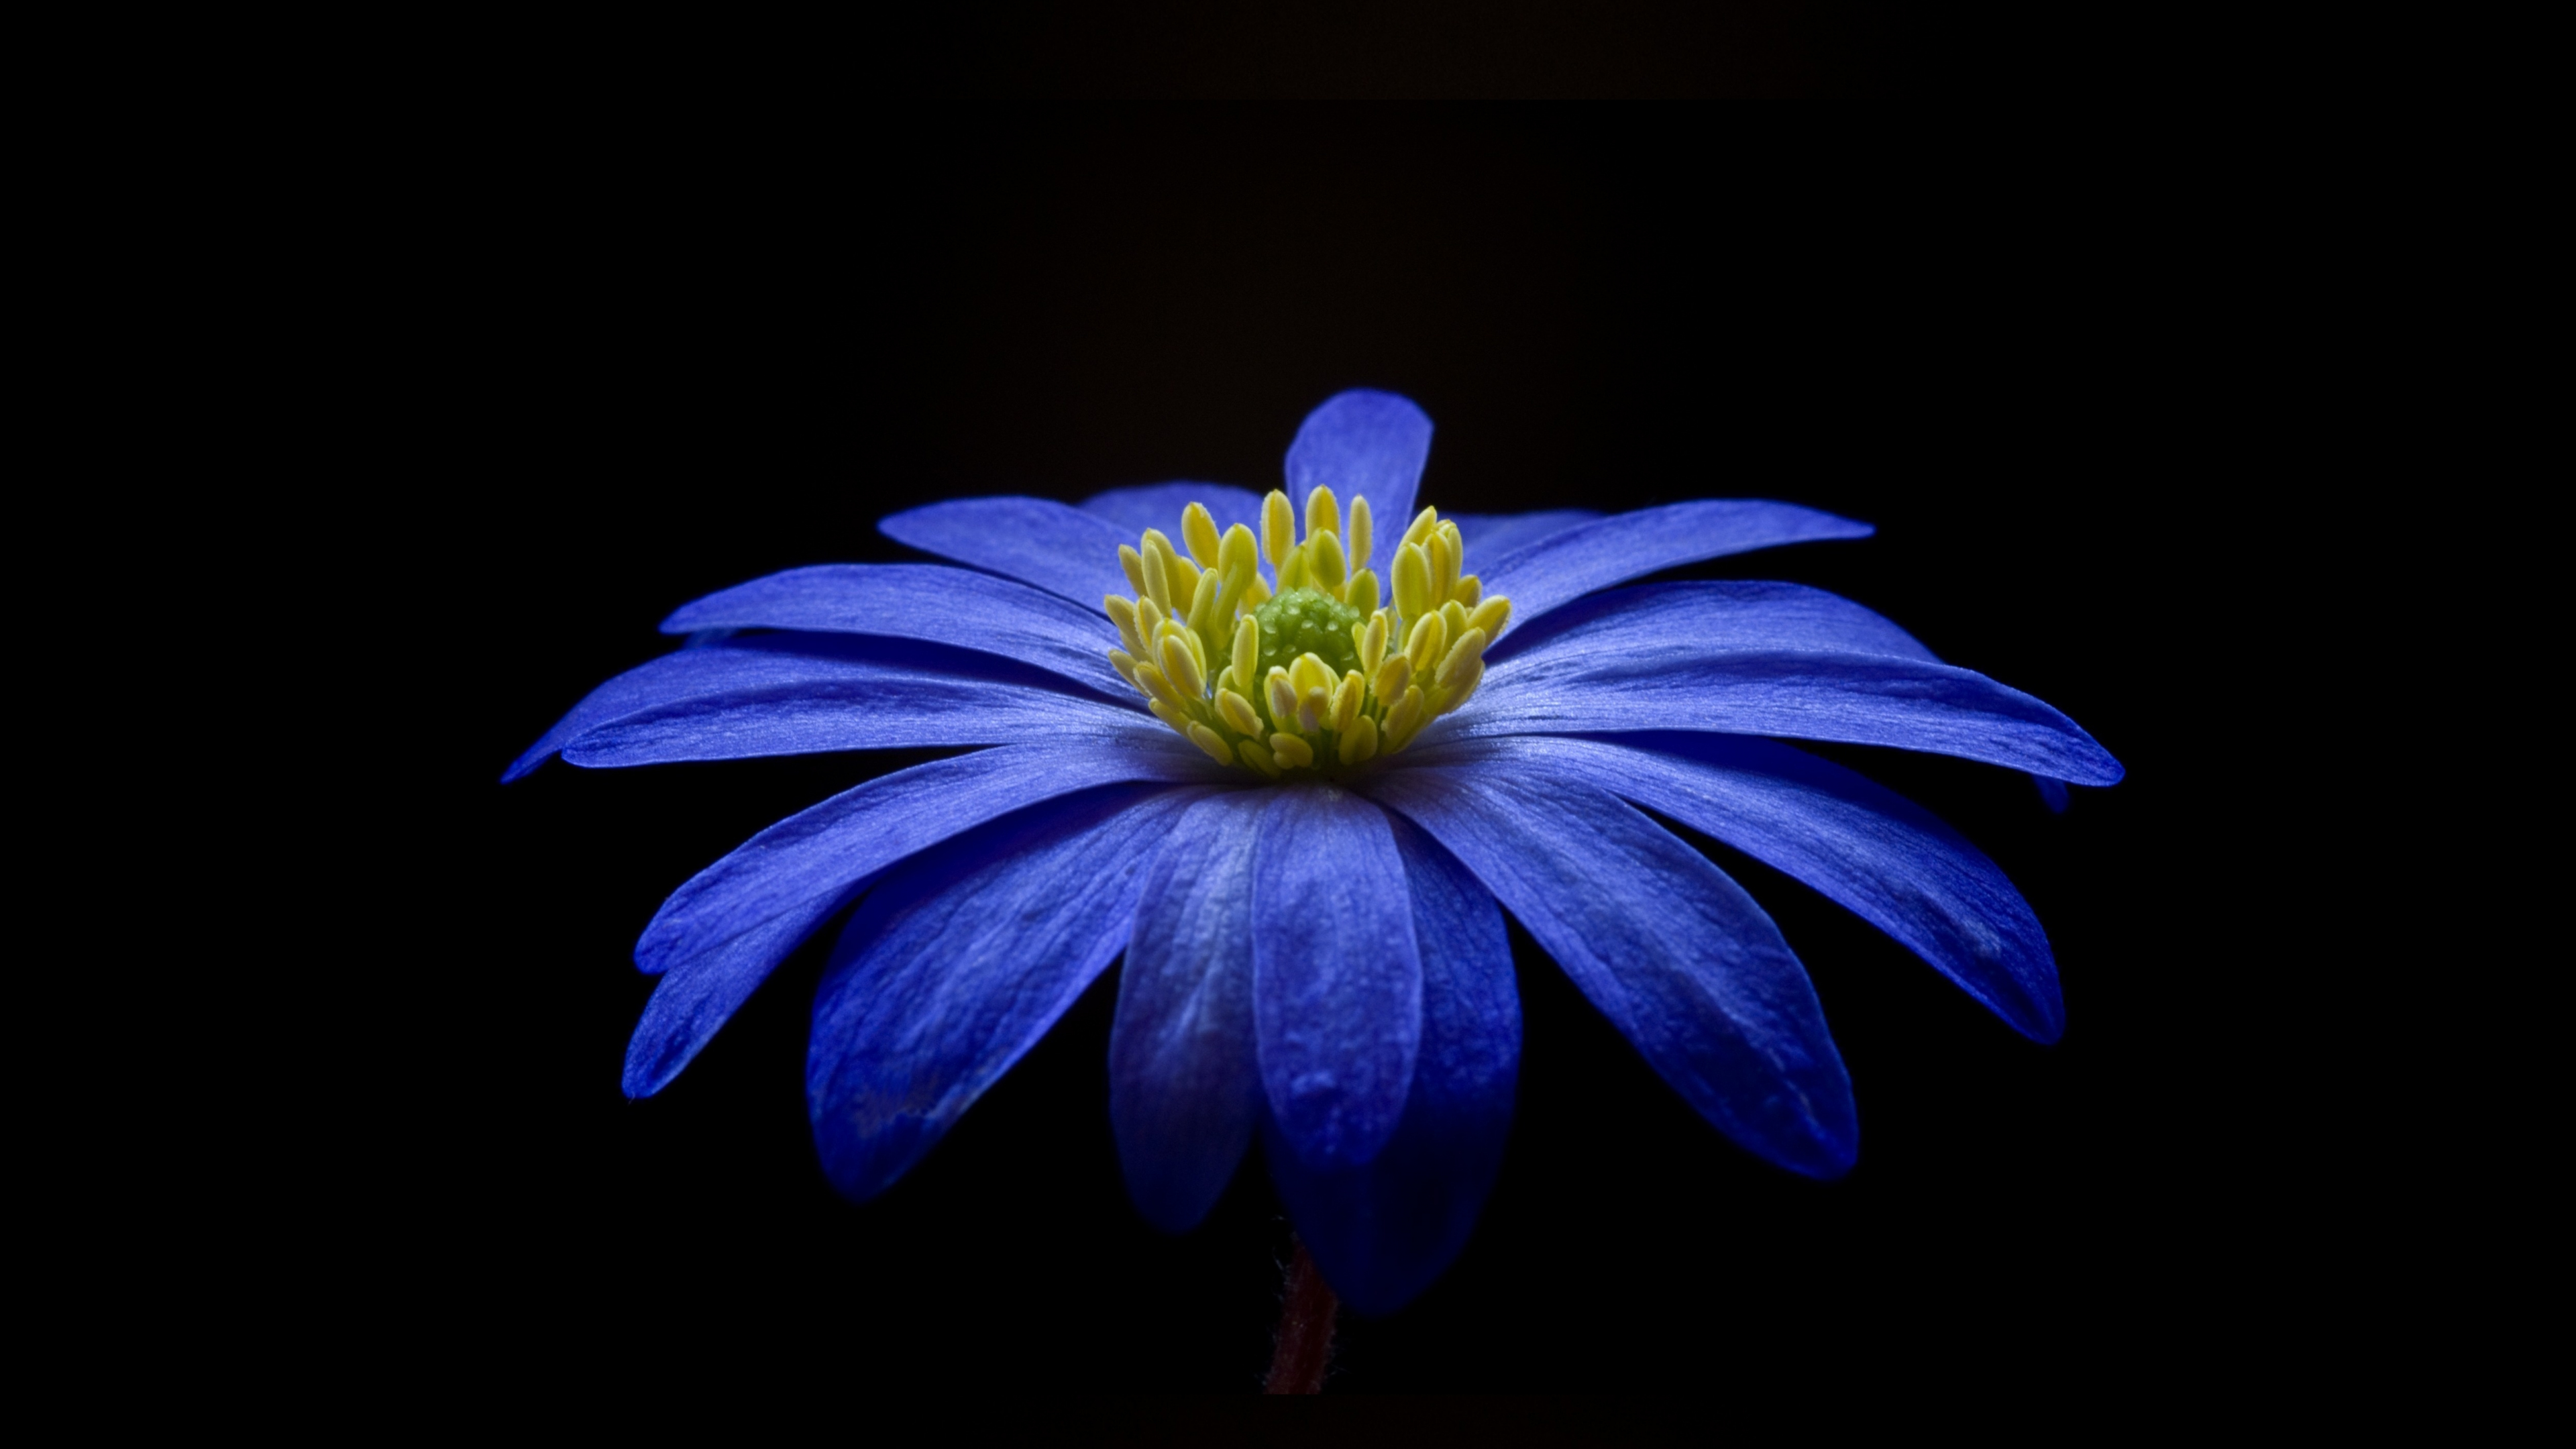 Download wallpaper 3840x2160 anemone, blue flower, portrait 4k ...